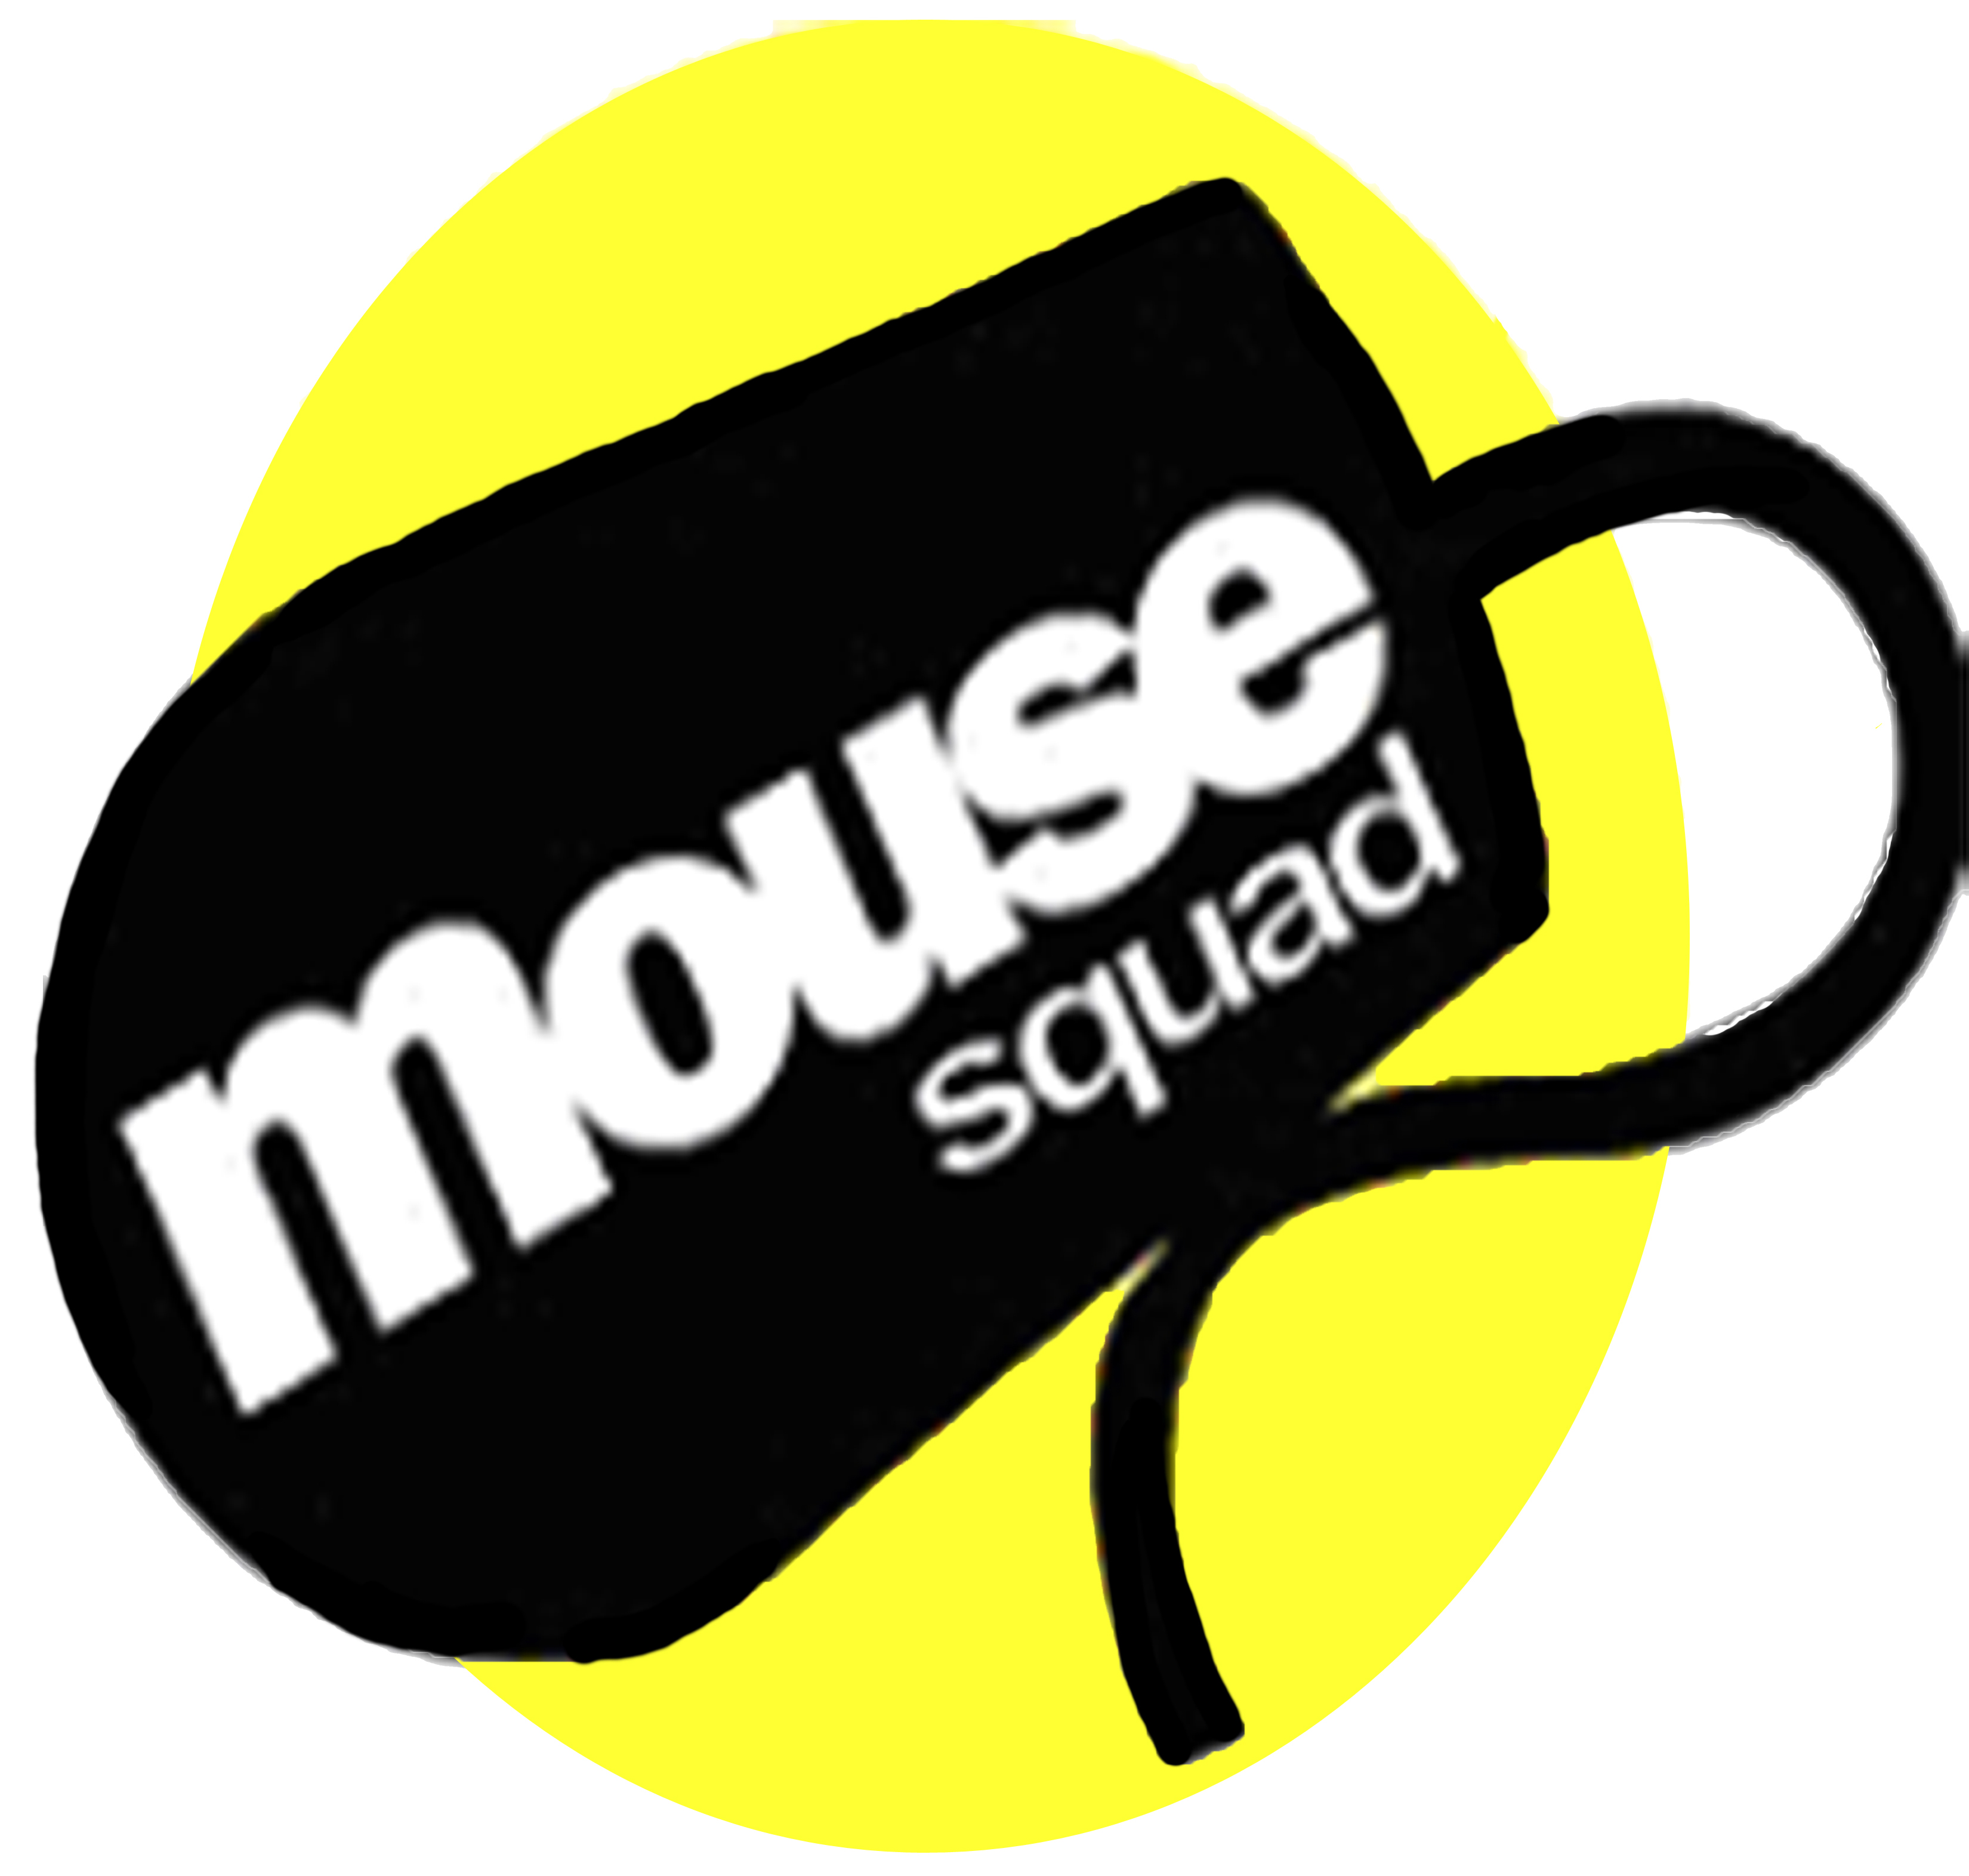 MOUSE logo